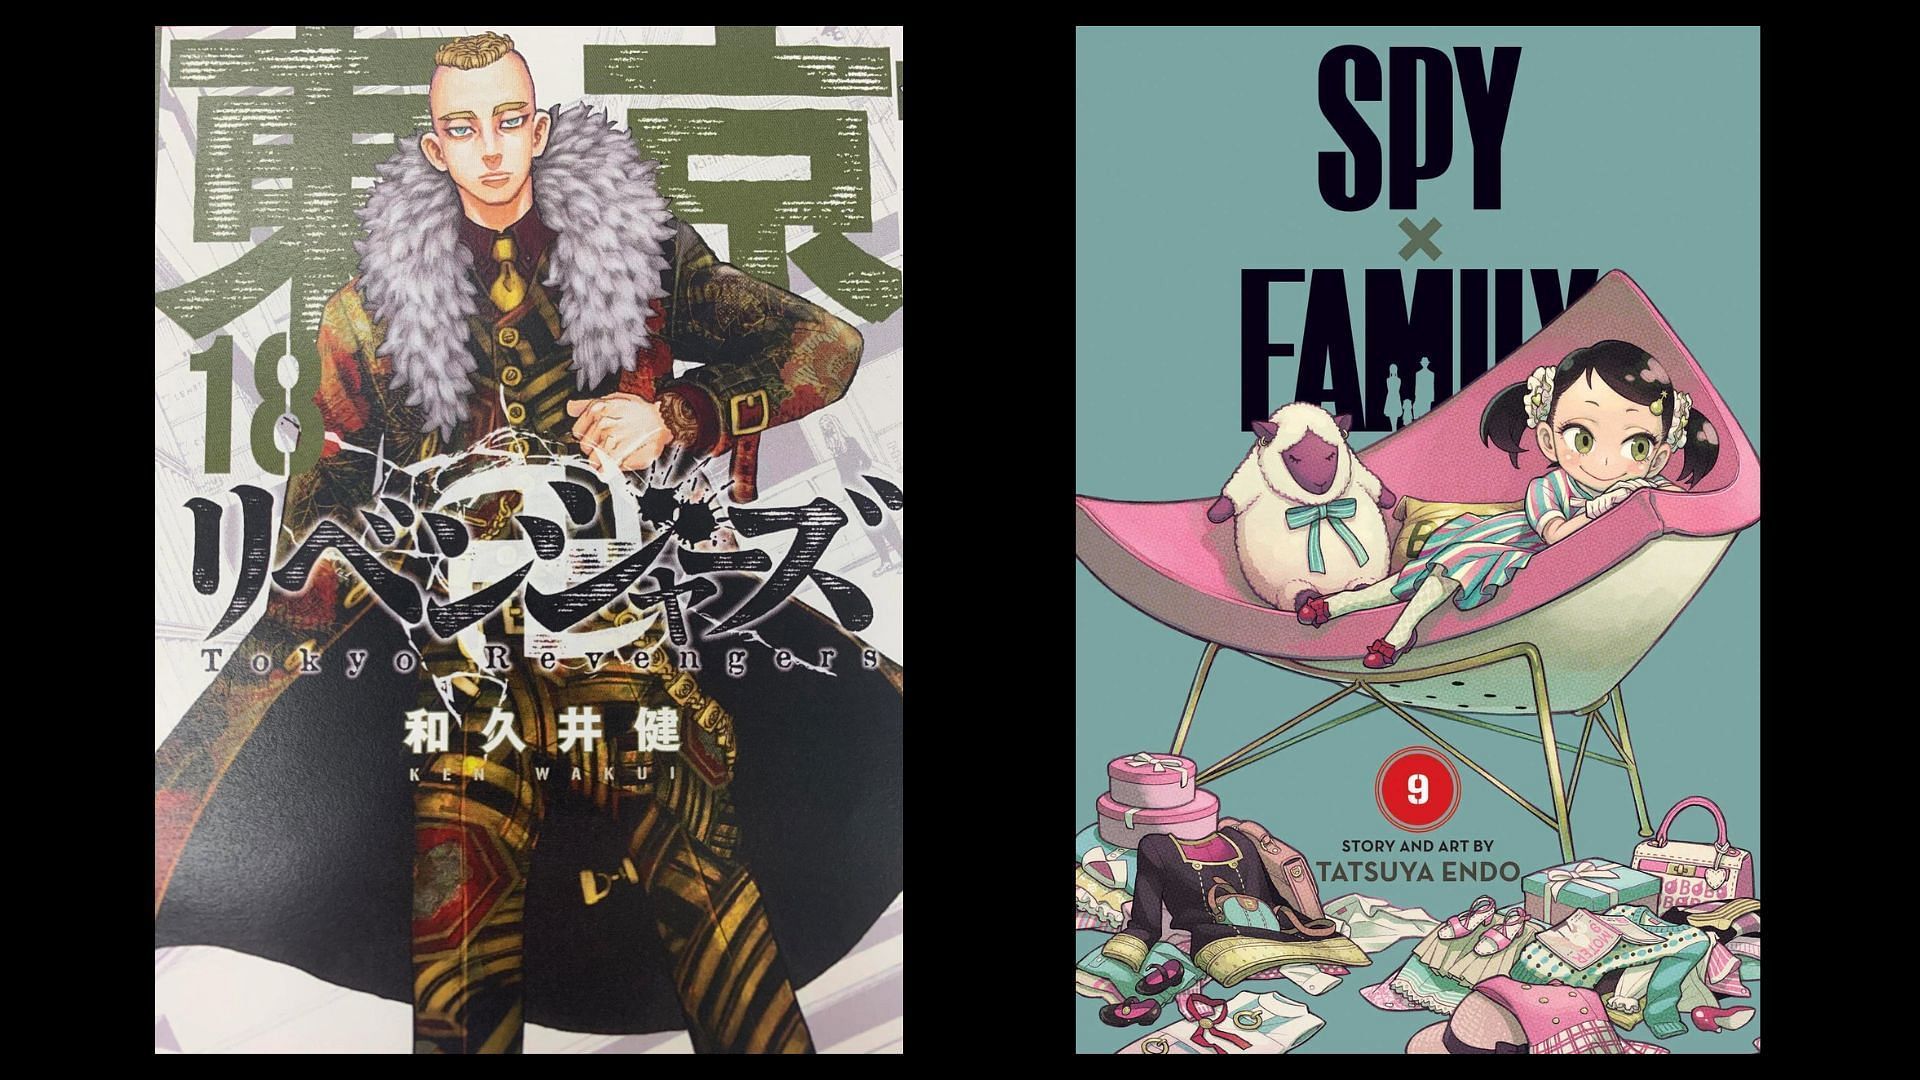 Tokyo Revengers volume 18 and Spy x Family volume 9 covers (Image via Kodansha, Shueisha)